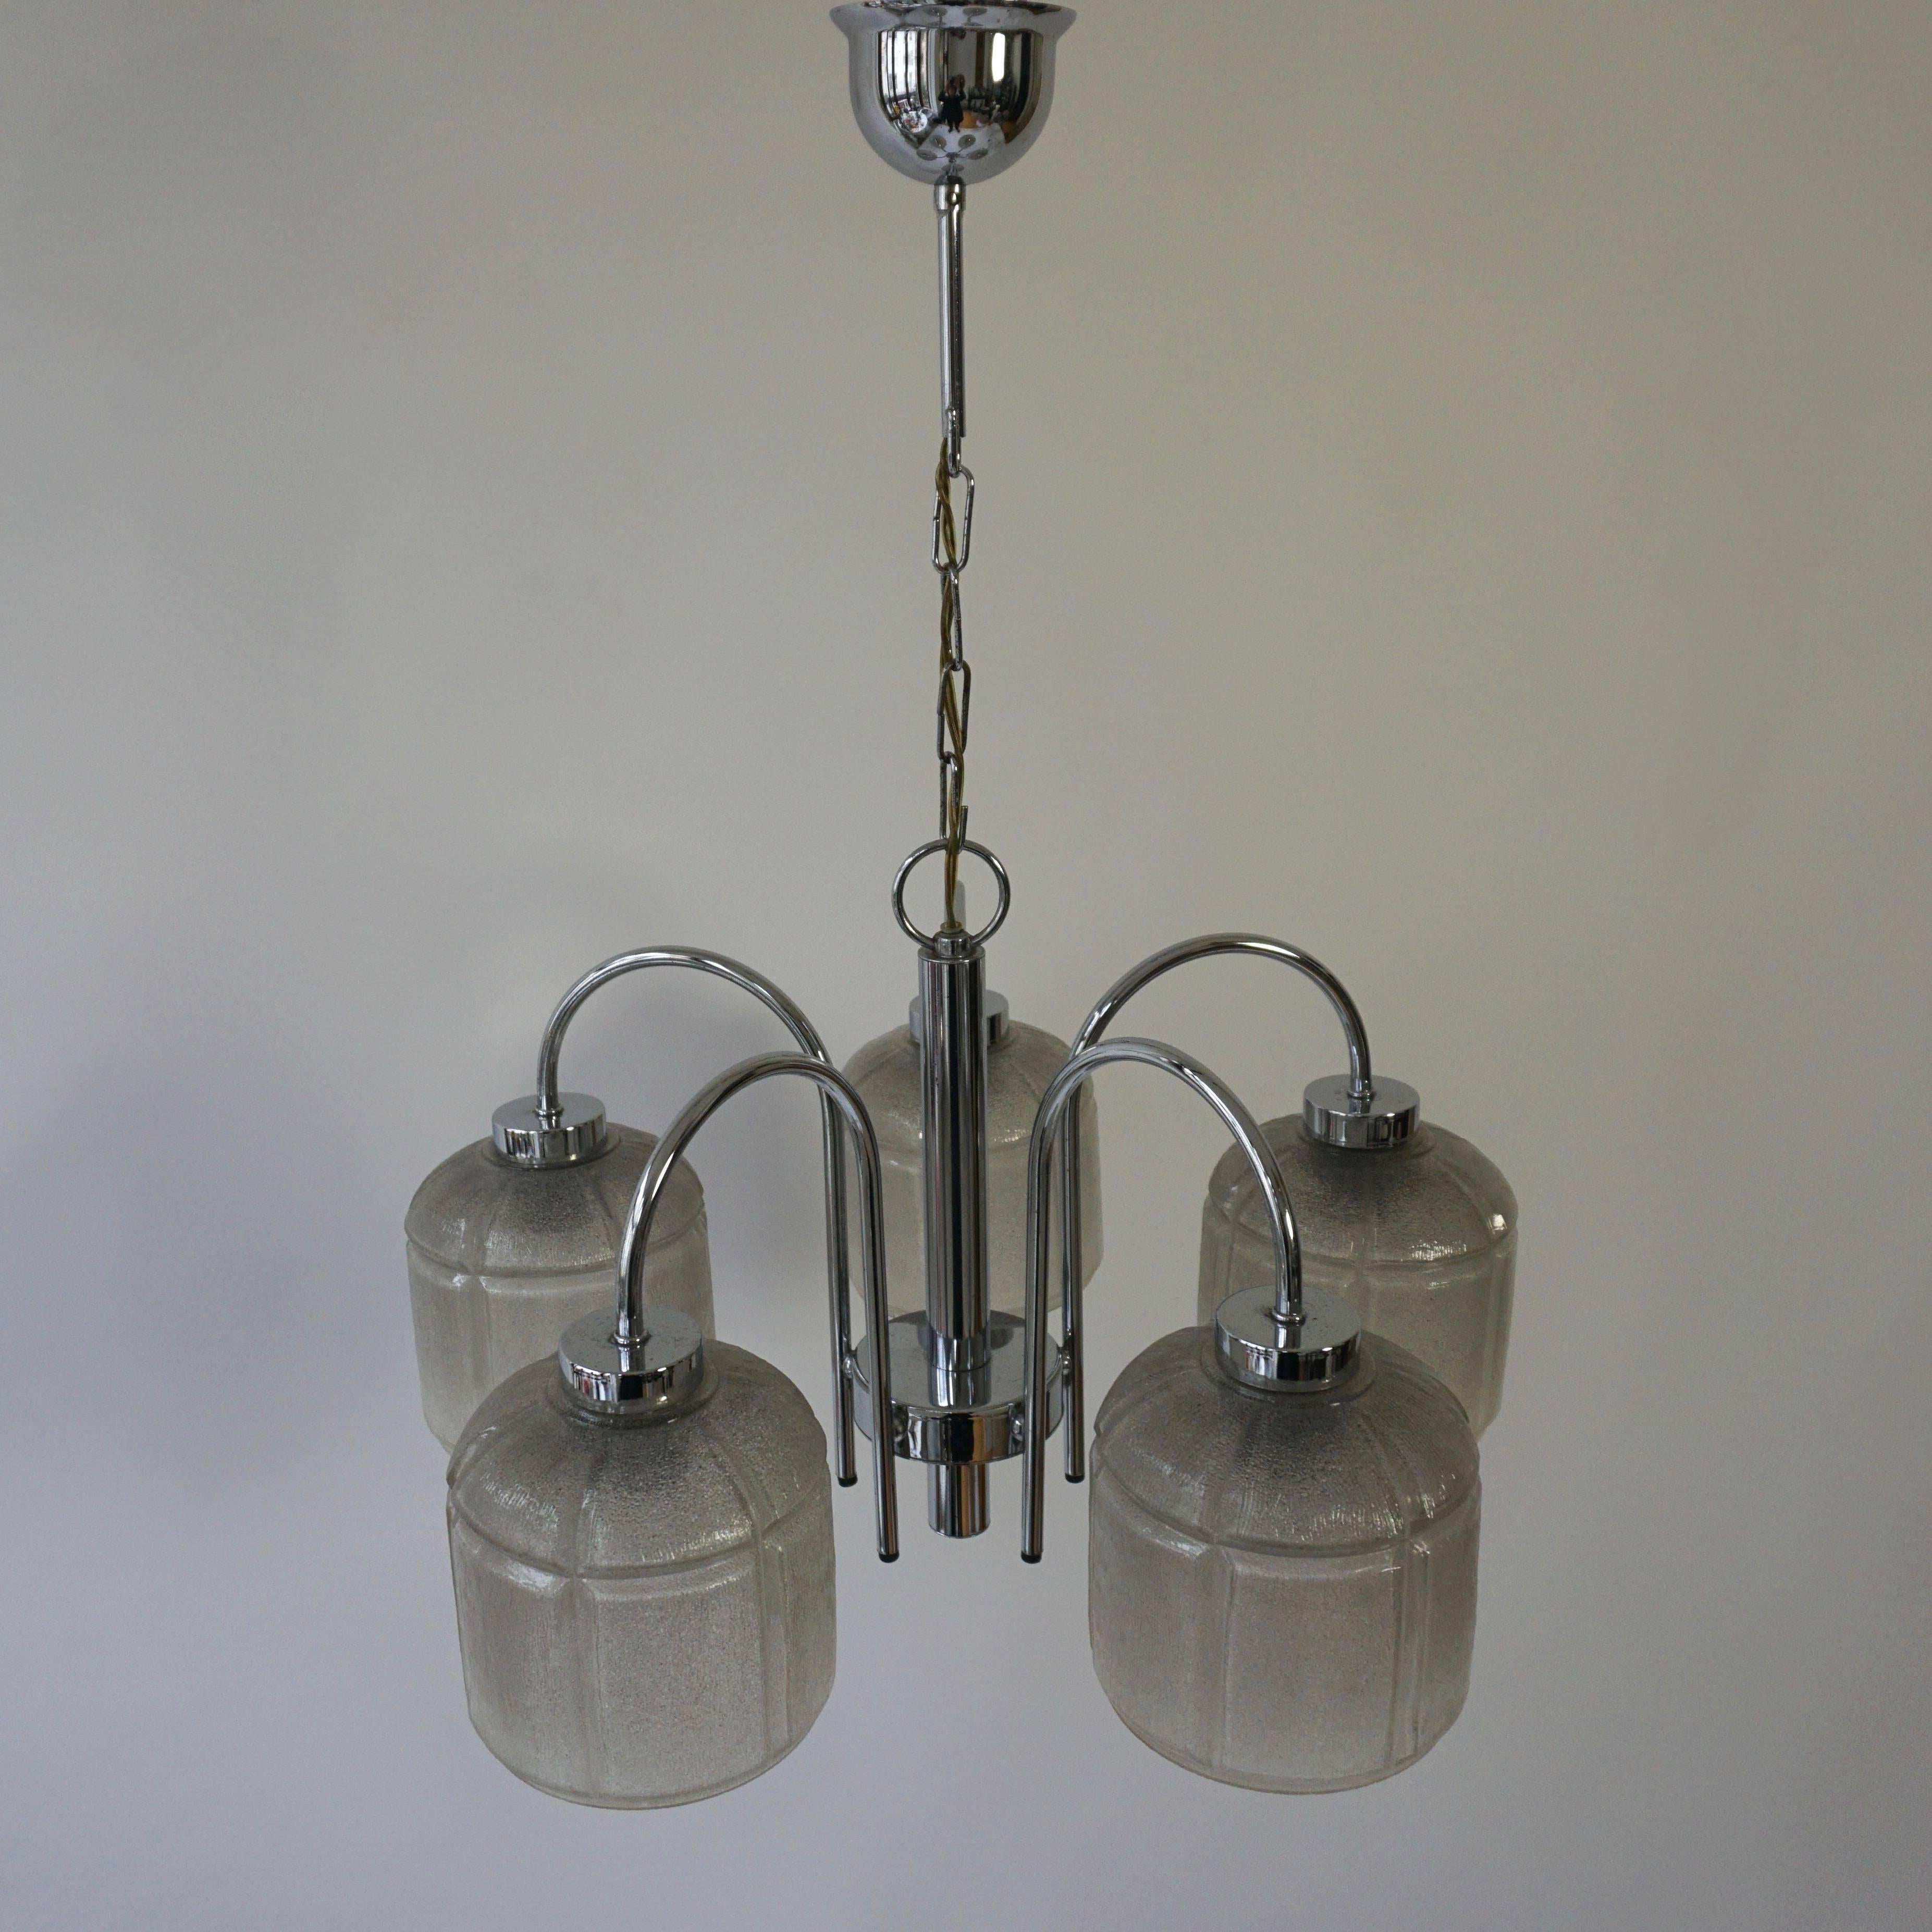 Italian glass and chrome chandelier.
Diameter 54 cm.
Height 70 cm.
Five E14 bulbs.